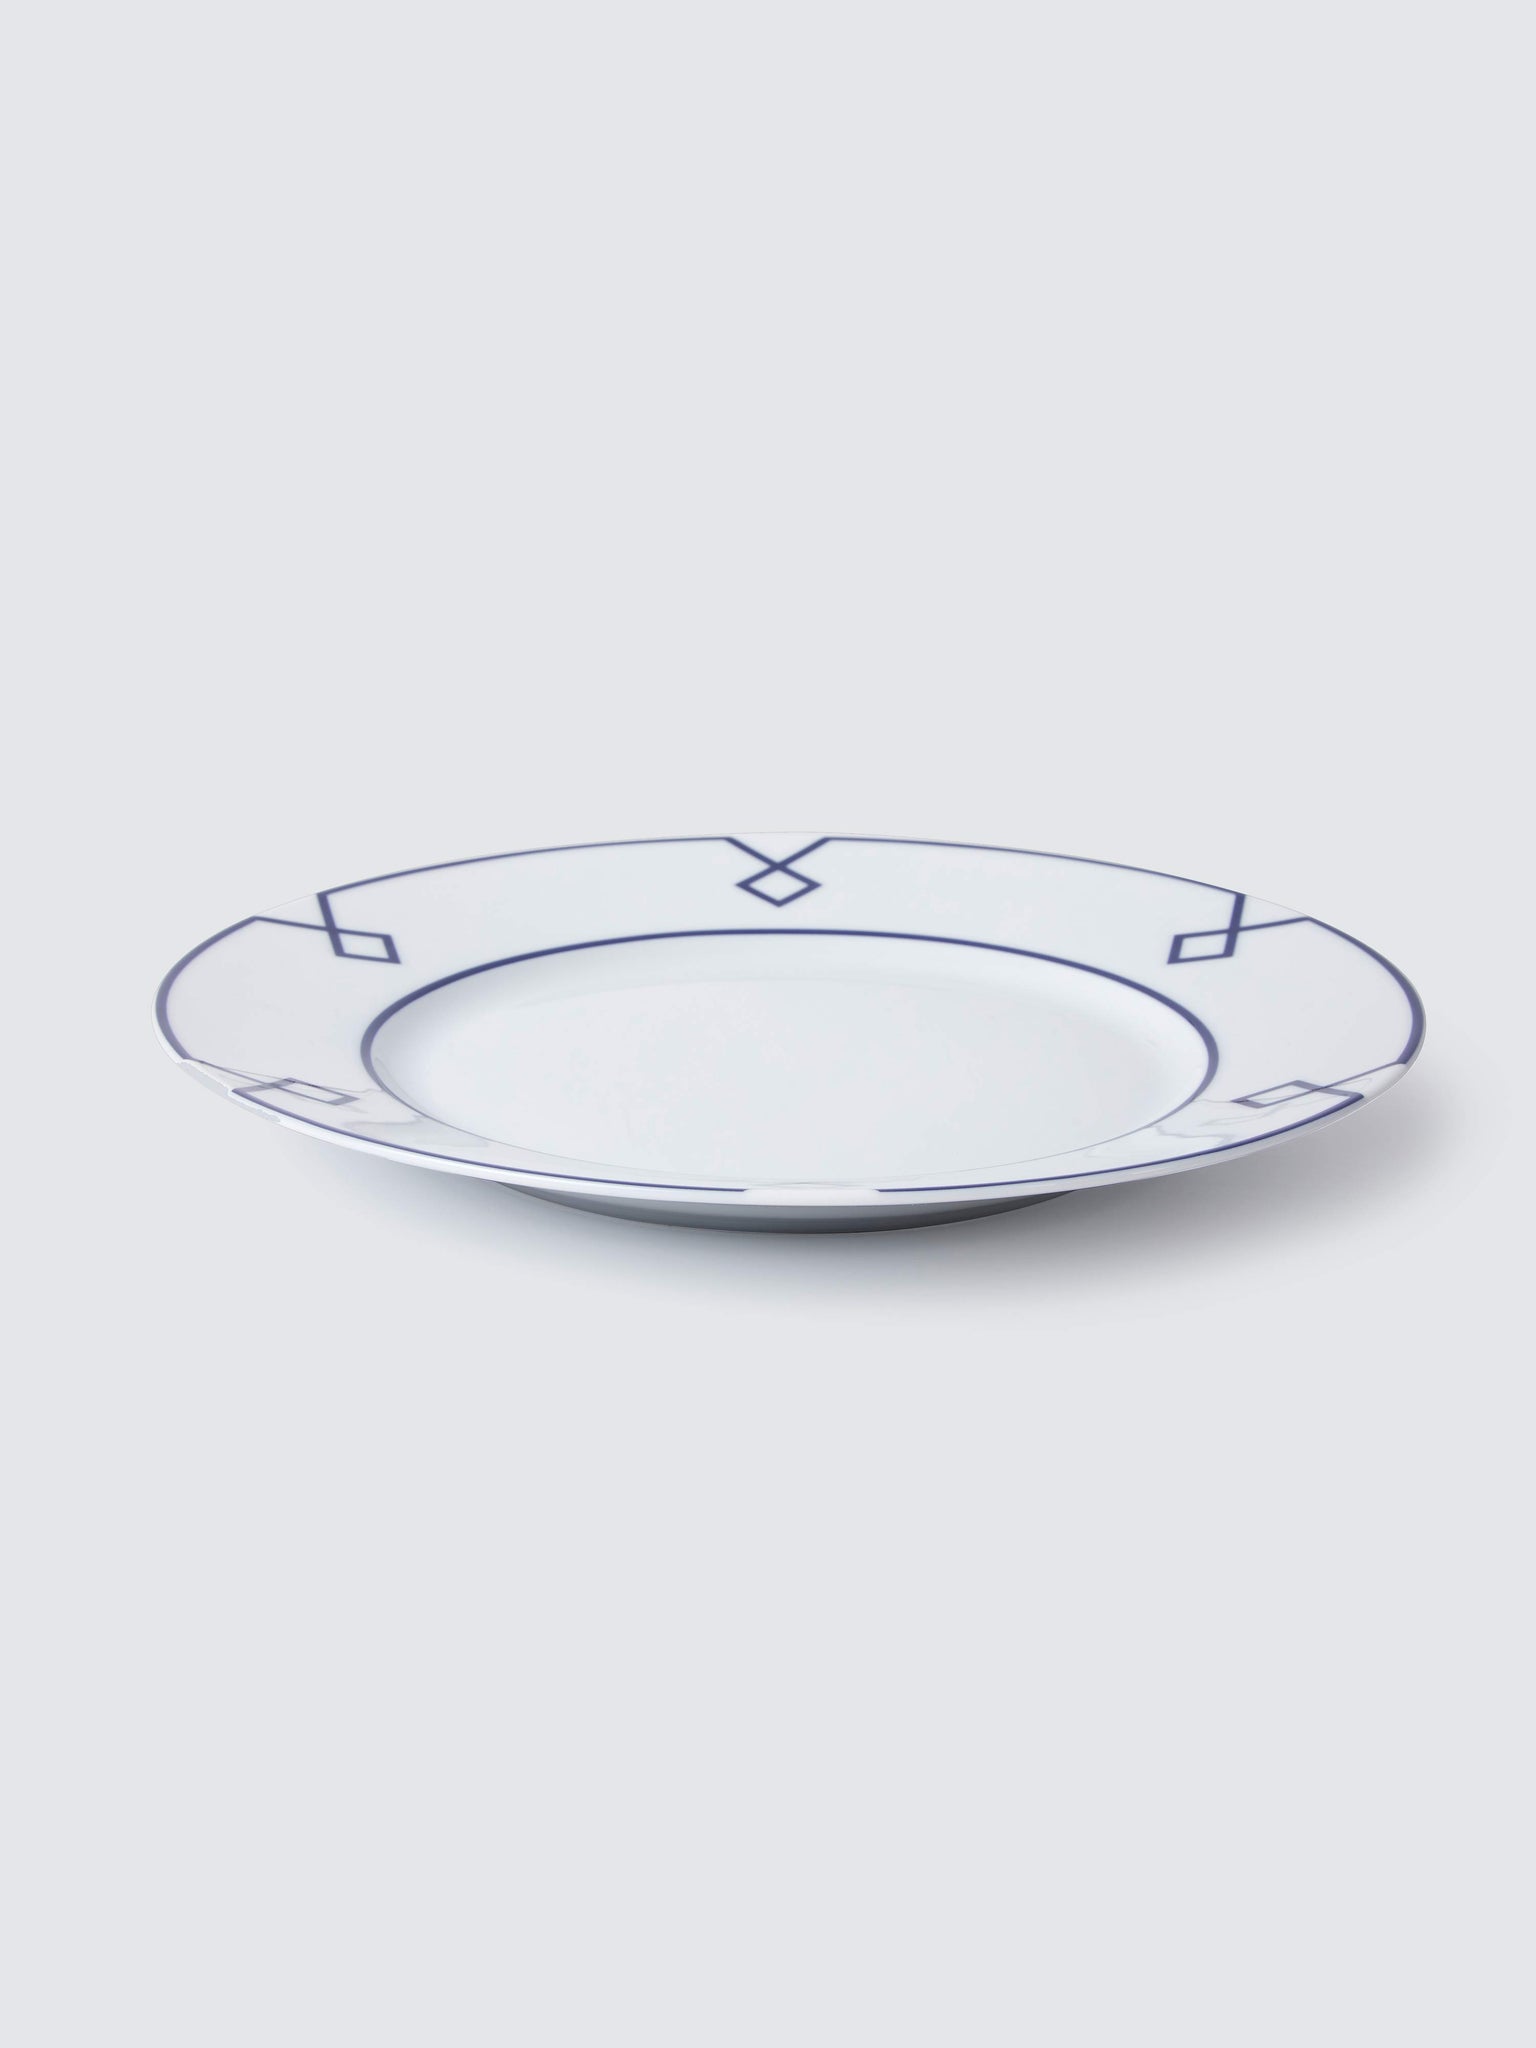 Naples Dinner Plate with Navy Geometric Border